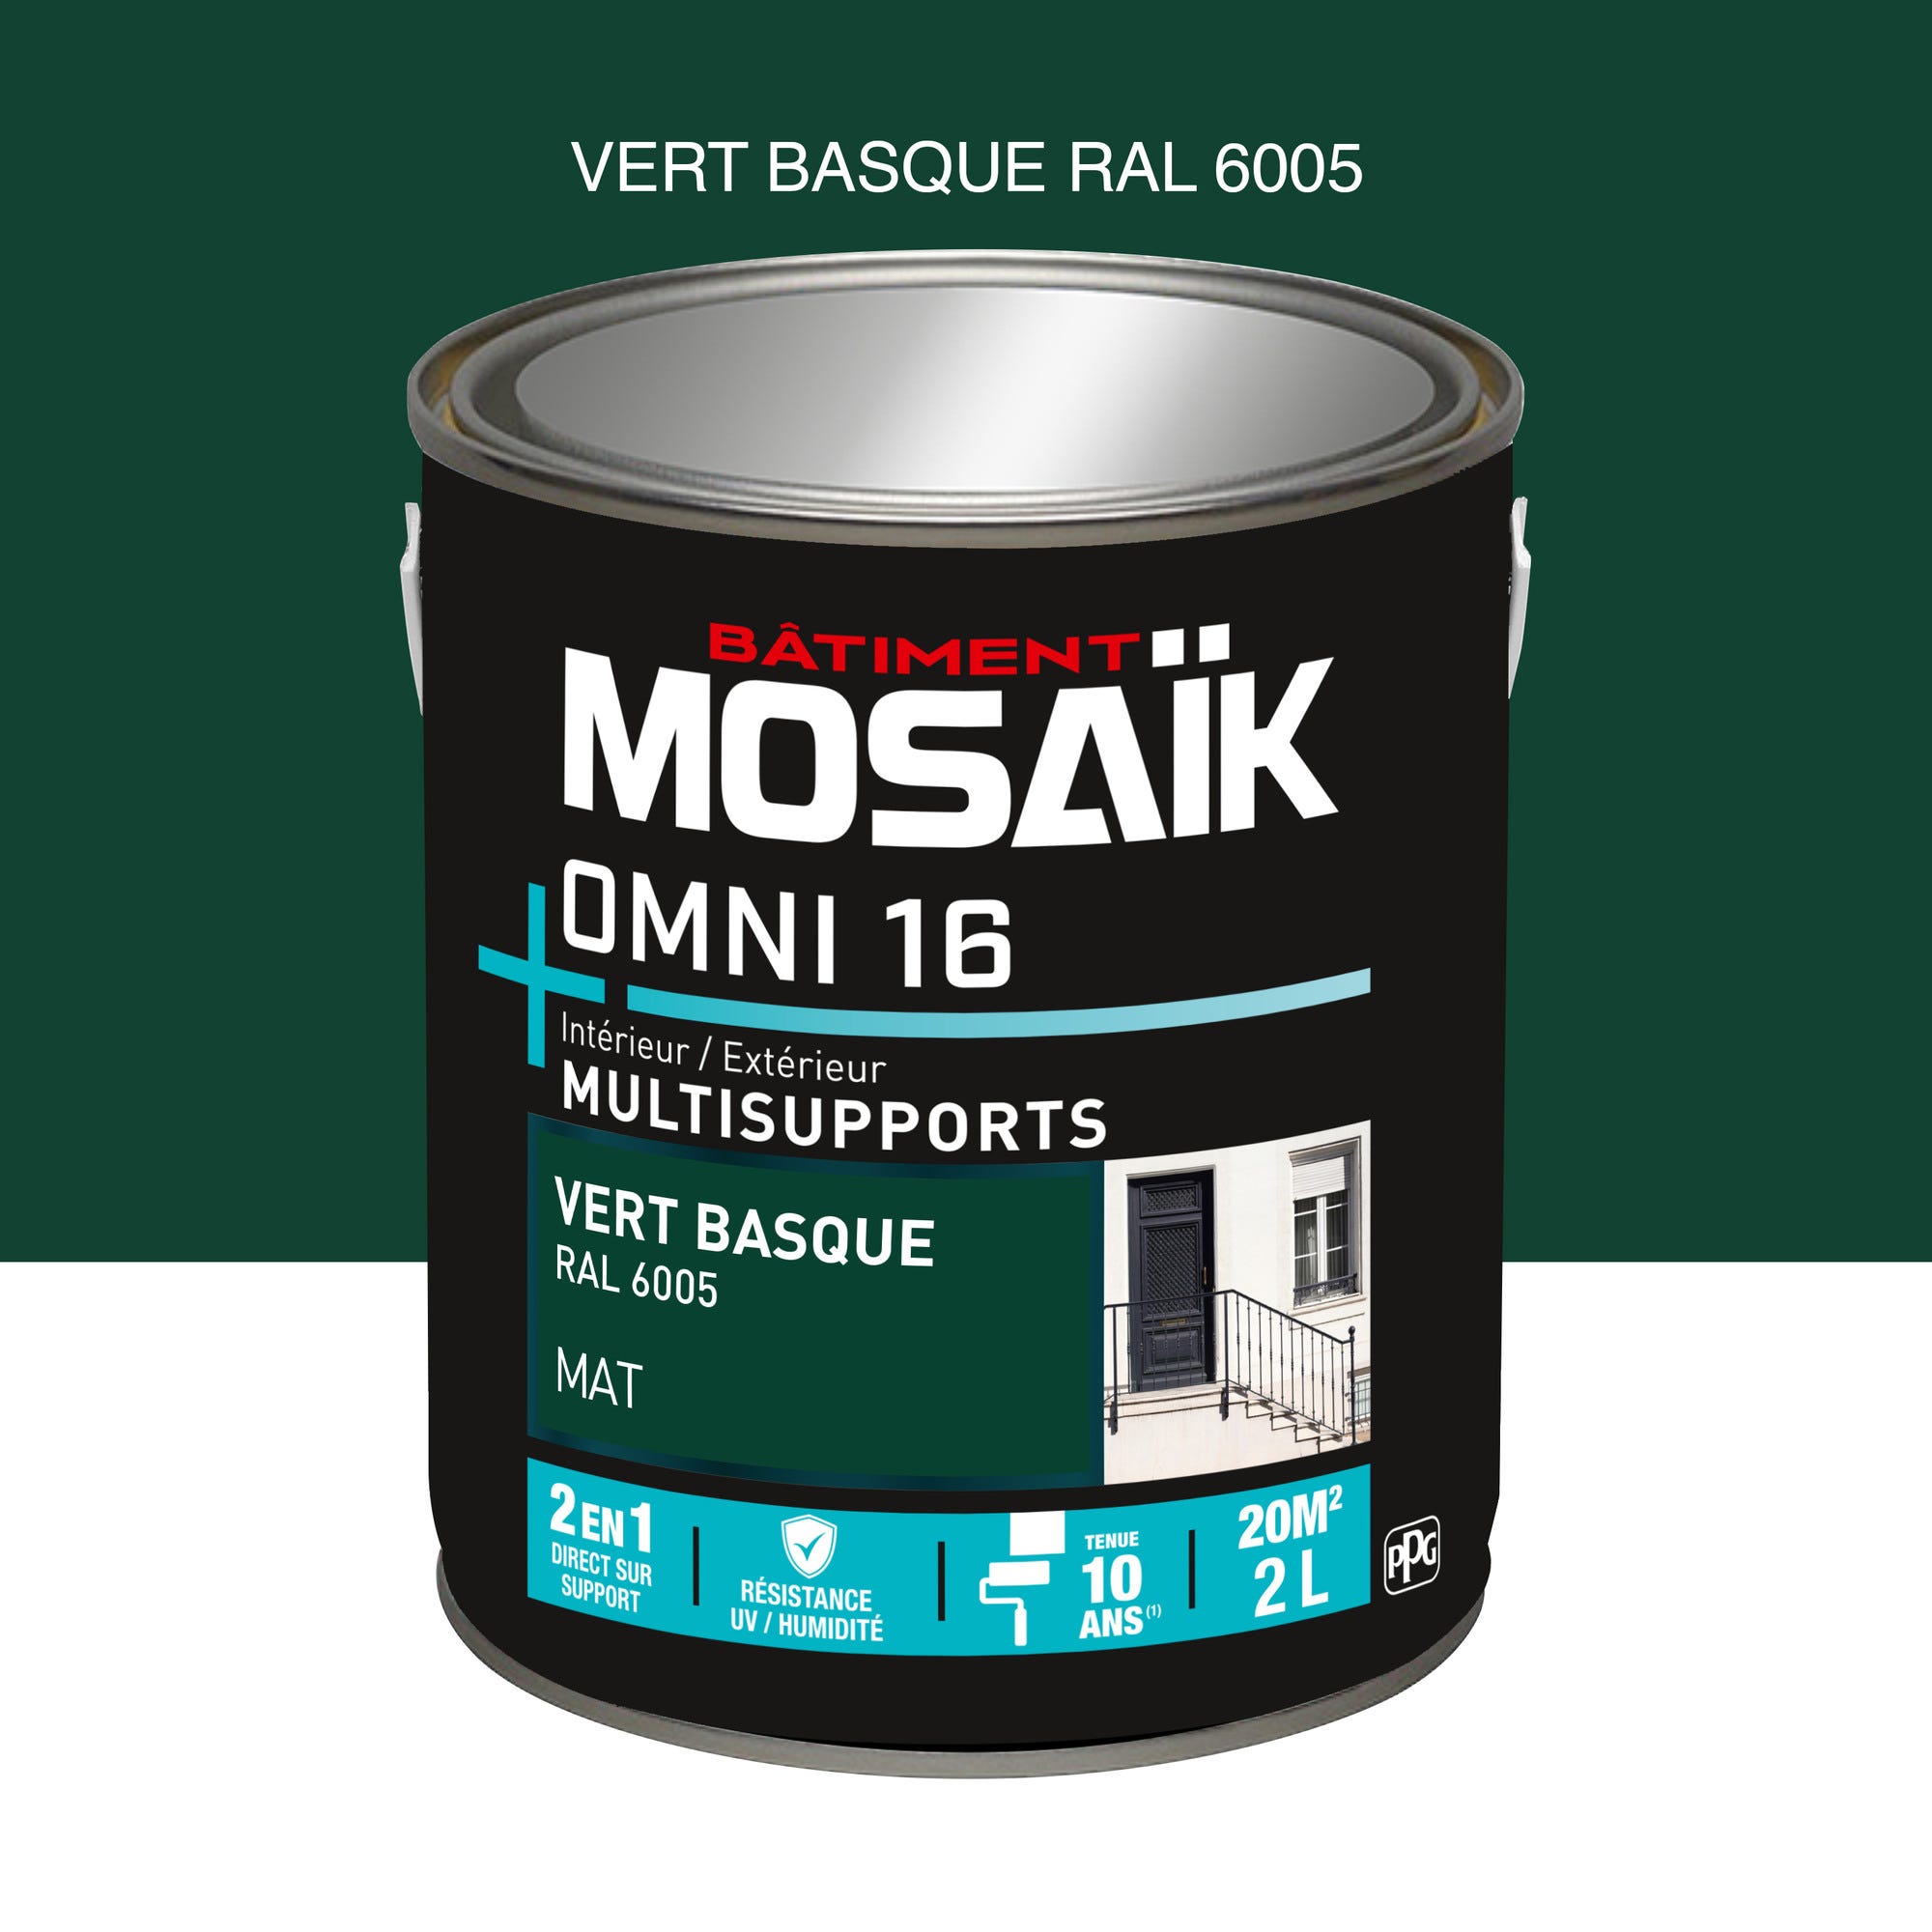 Peinture 2en1 int./ext. multisupport acrylique mat vert basque RAL6005 2 L OMNI16 - MOSAIK 0